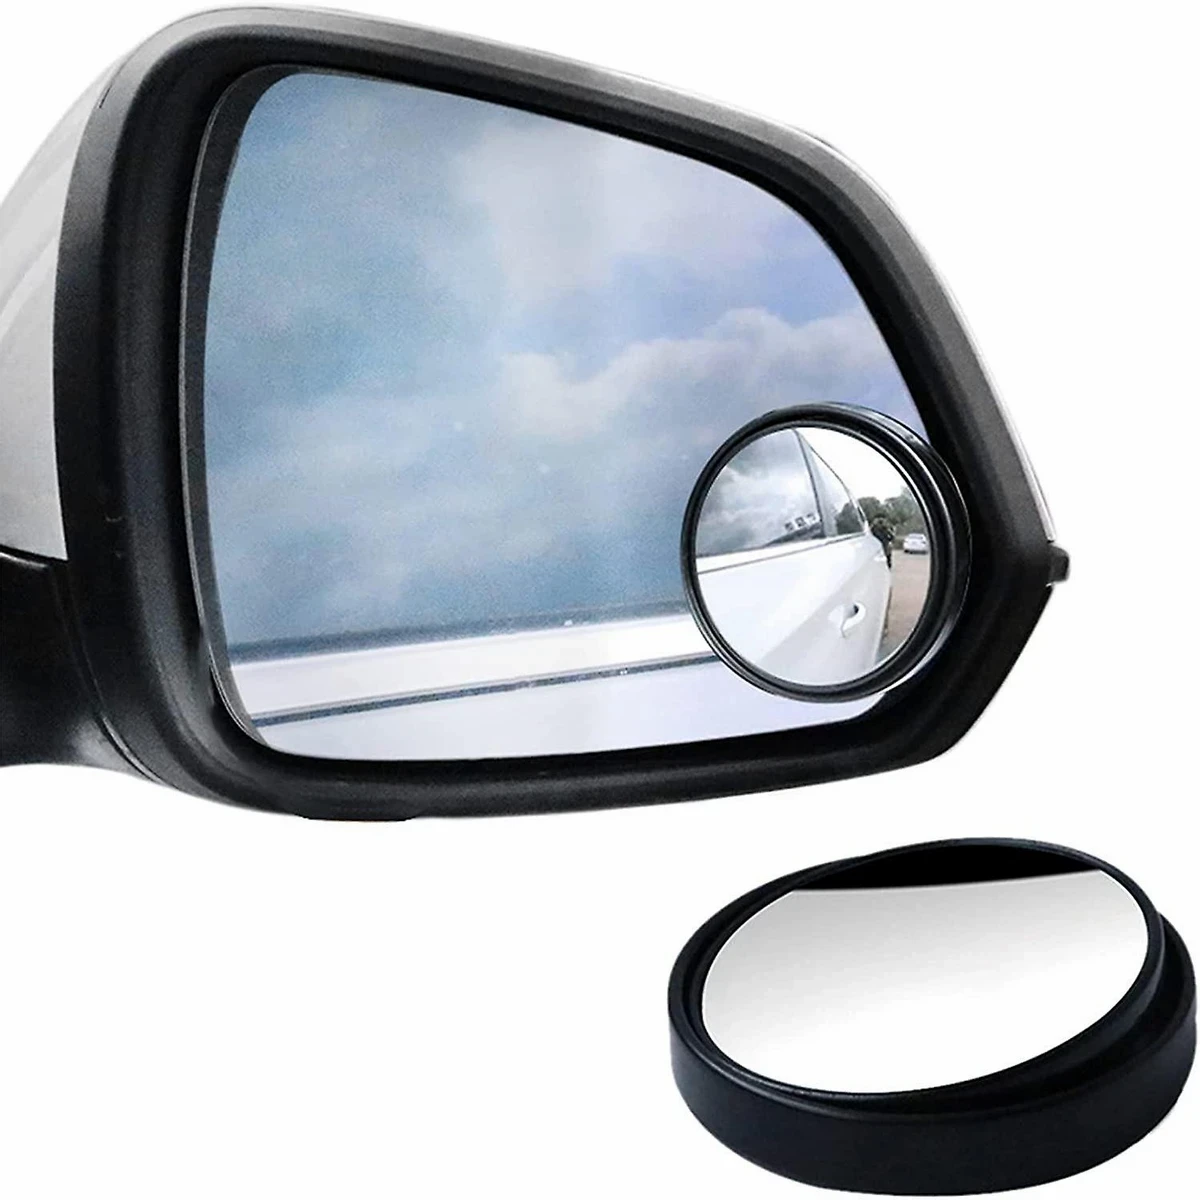 Blind Spot Mirror 360 Degree Adjustabe Car View Mirror